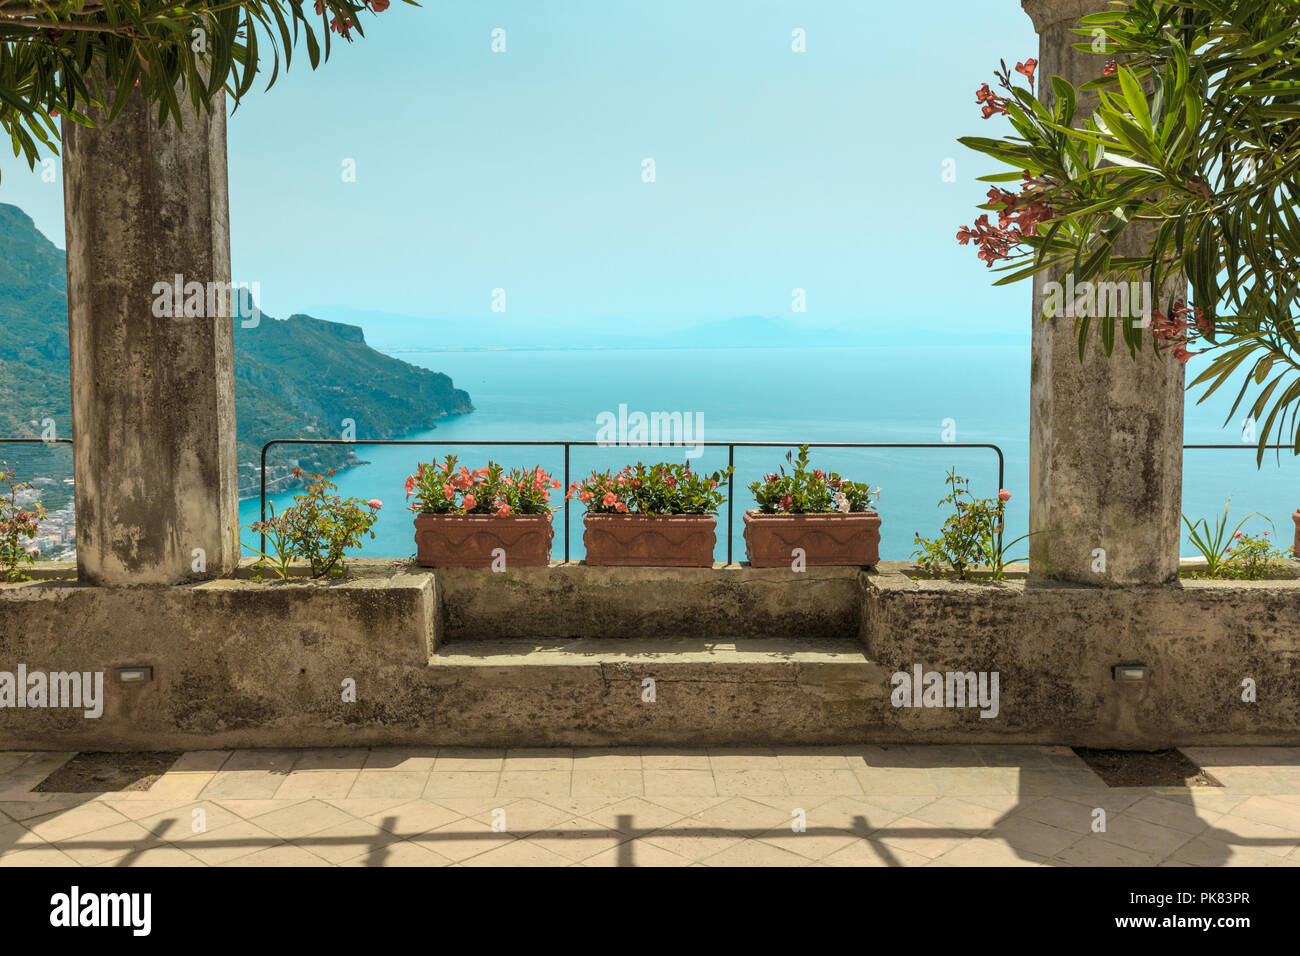 Pergola on the terrace. Mediterranean Sea. Ravello, scenic view of the Amalfi Coast from Villa Rufolo. Italy. Stock Photo